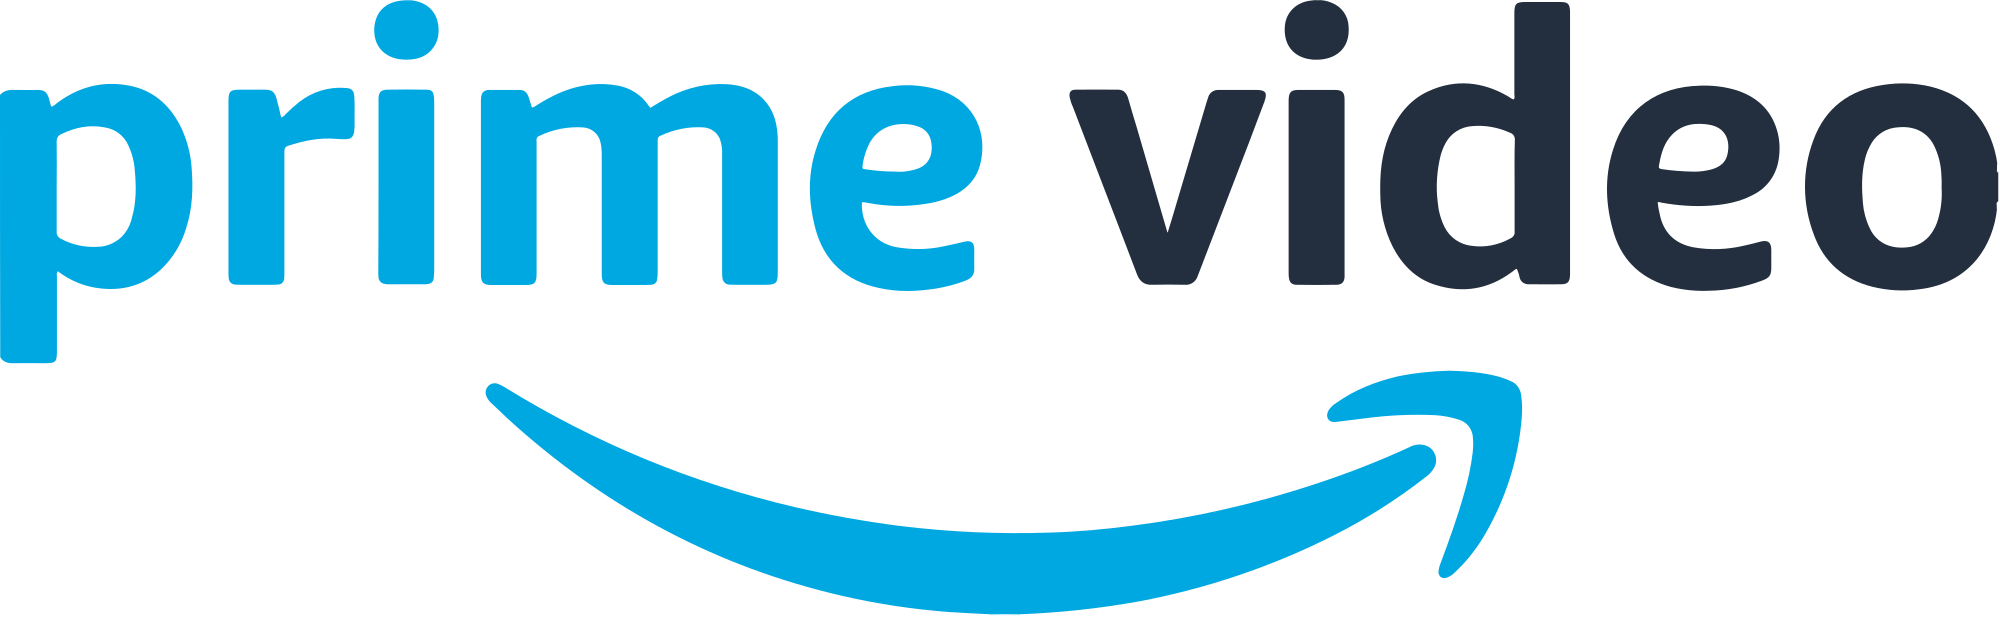 Prime Video - network